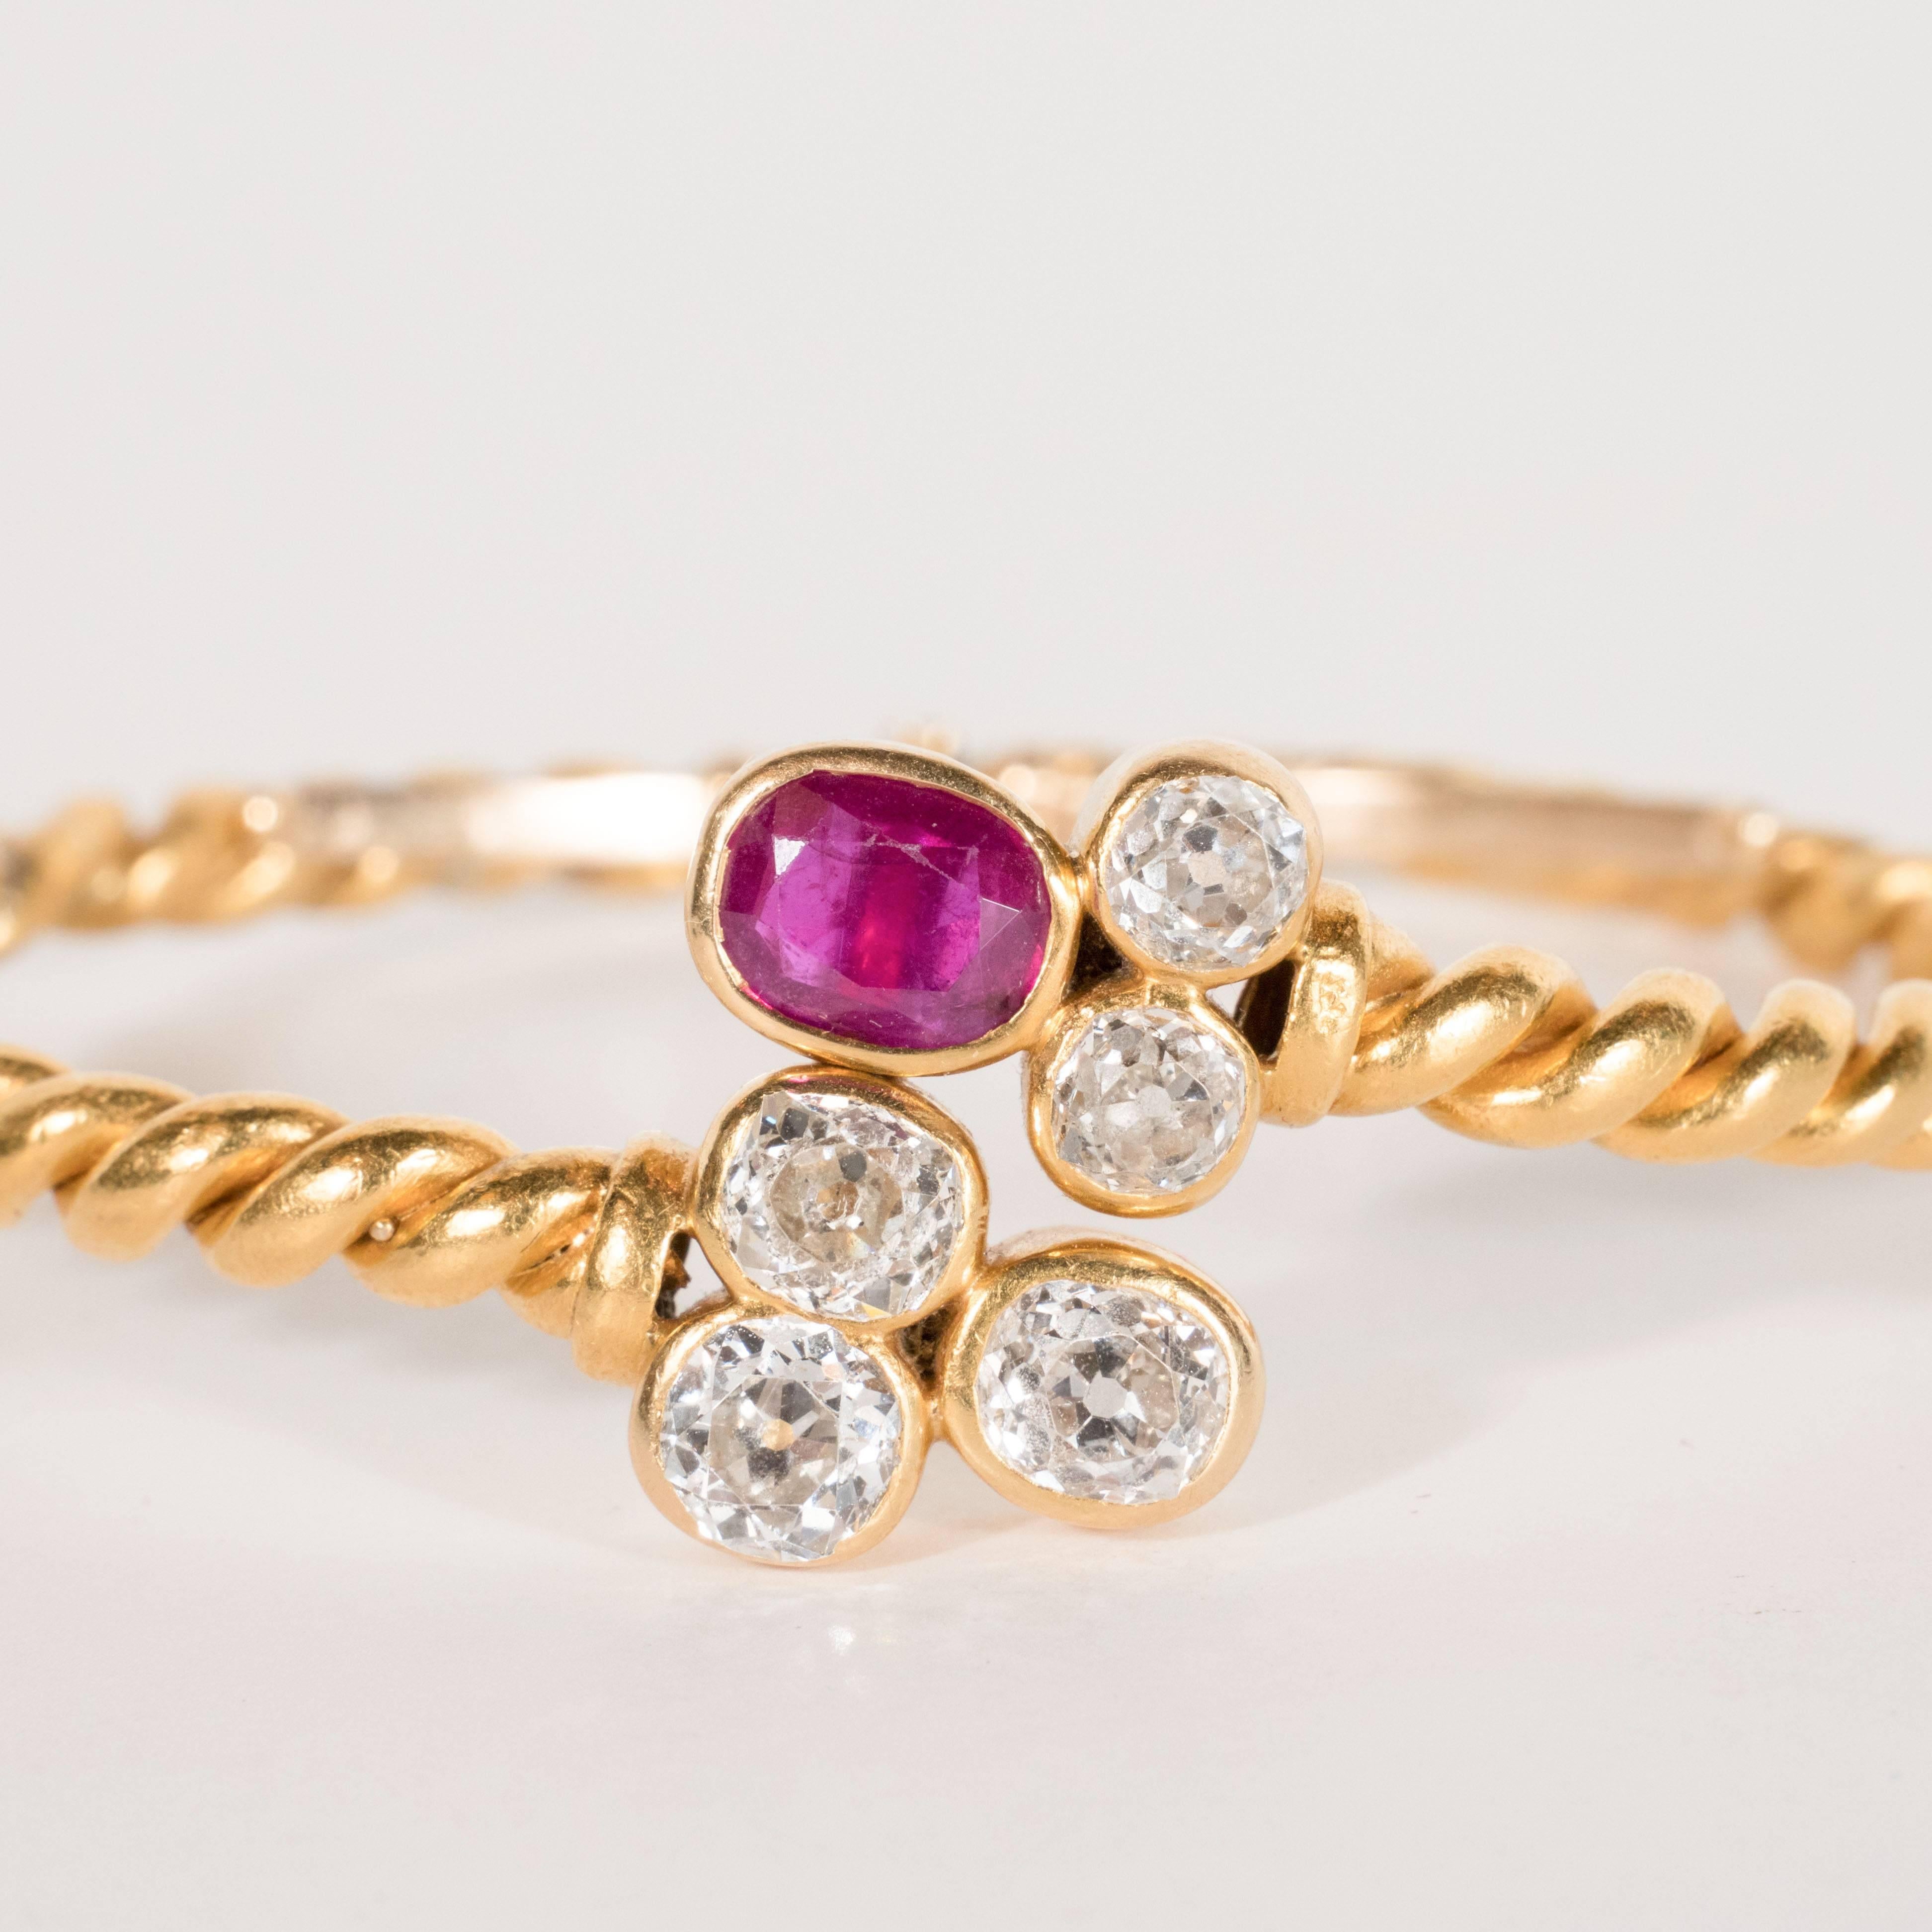 Women's Hand-Wrought 18 Karat Bangle Bracelet with Ruby and Old European Cut Diamonds